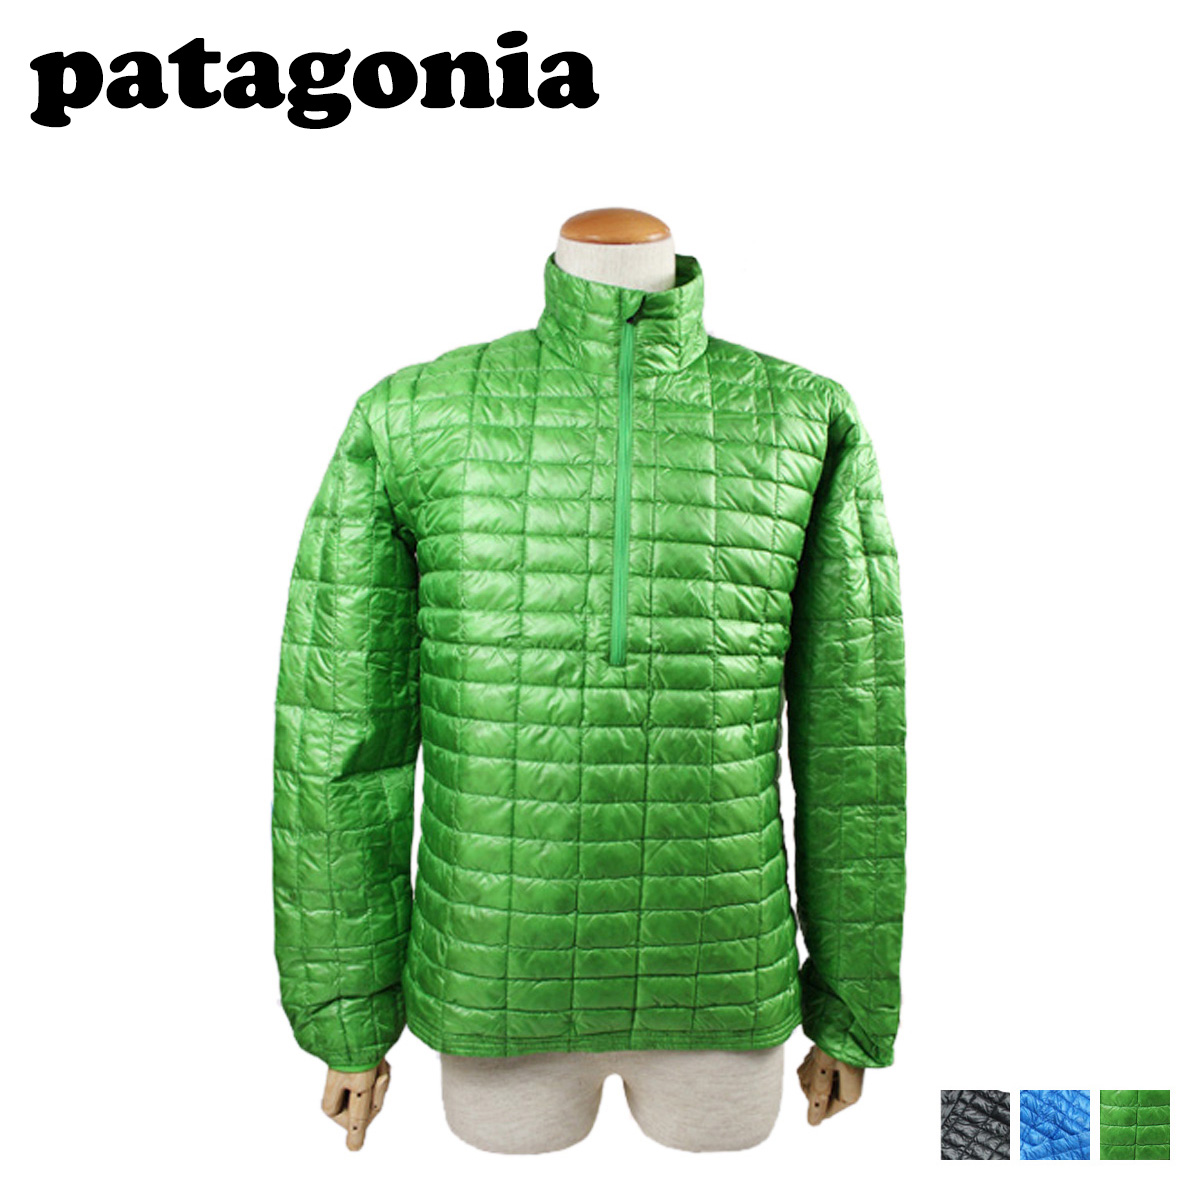 patagonia ultralight down shirt